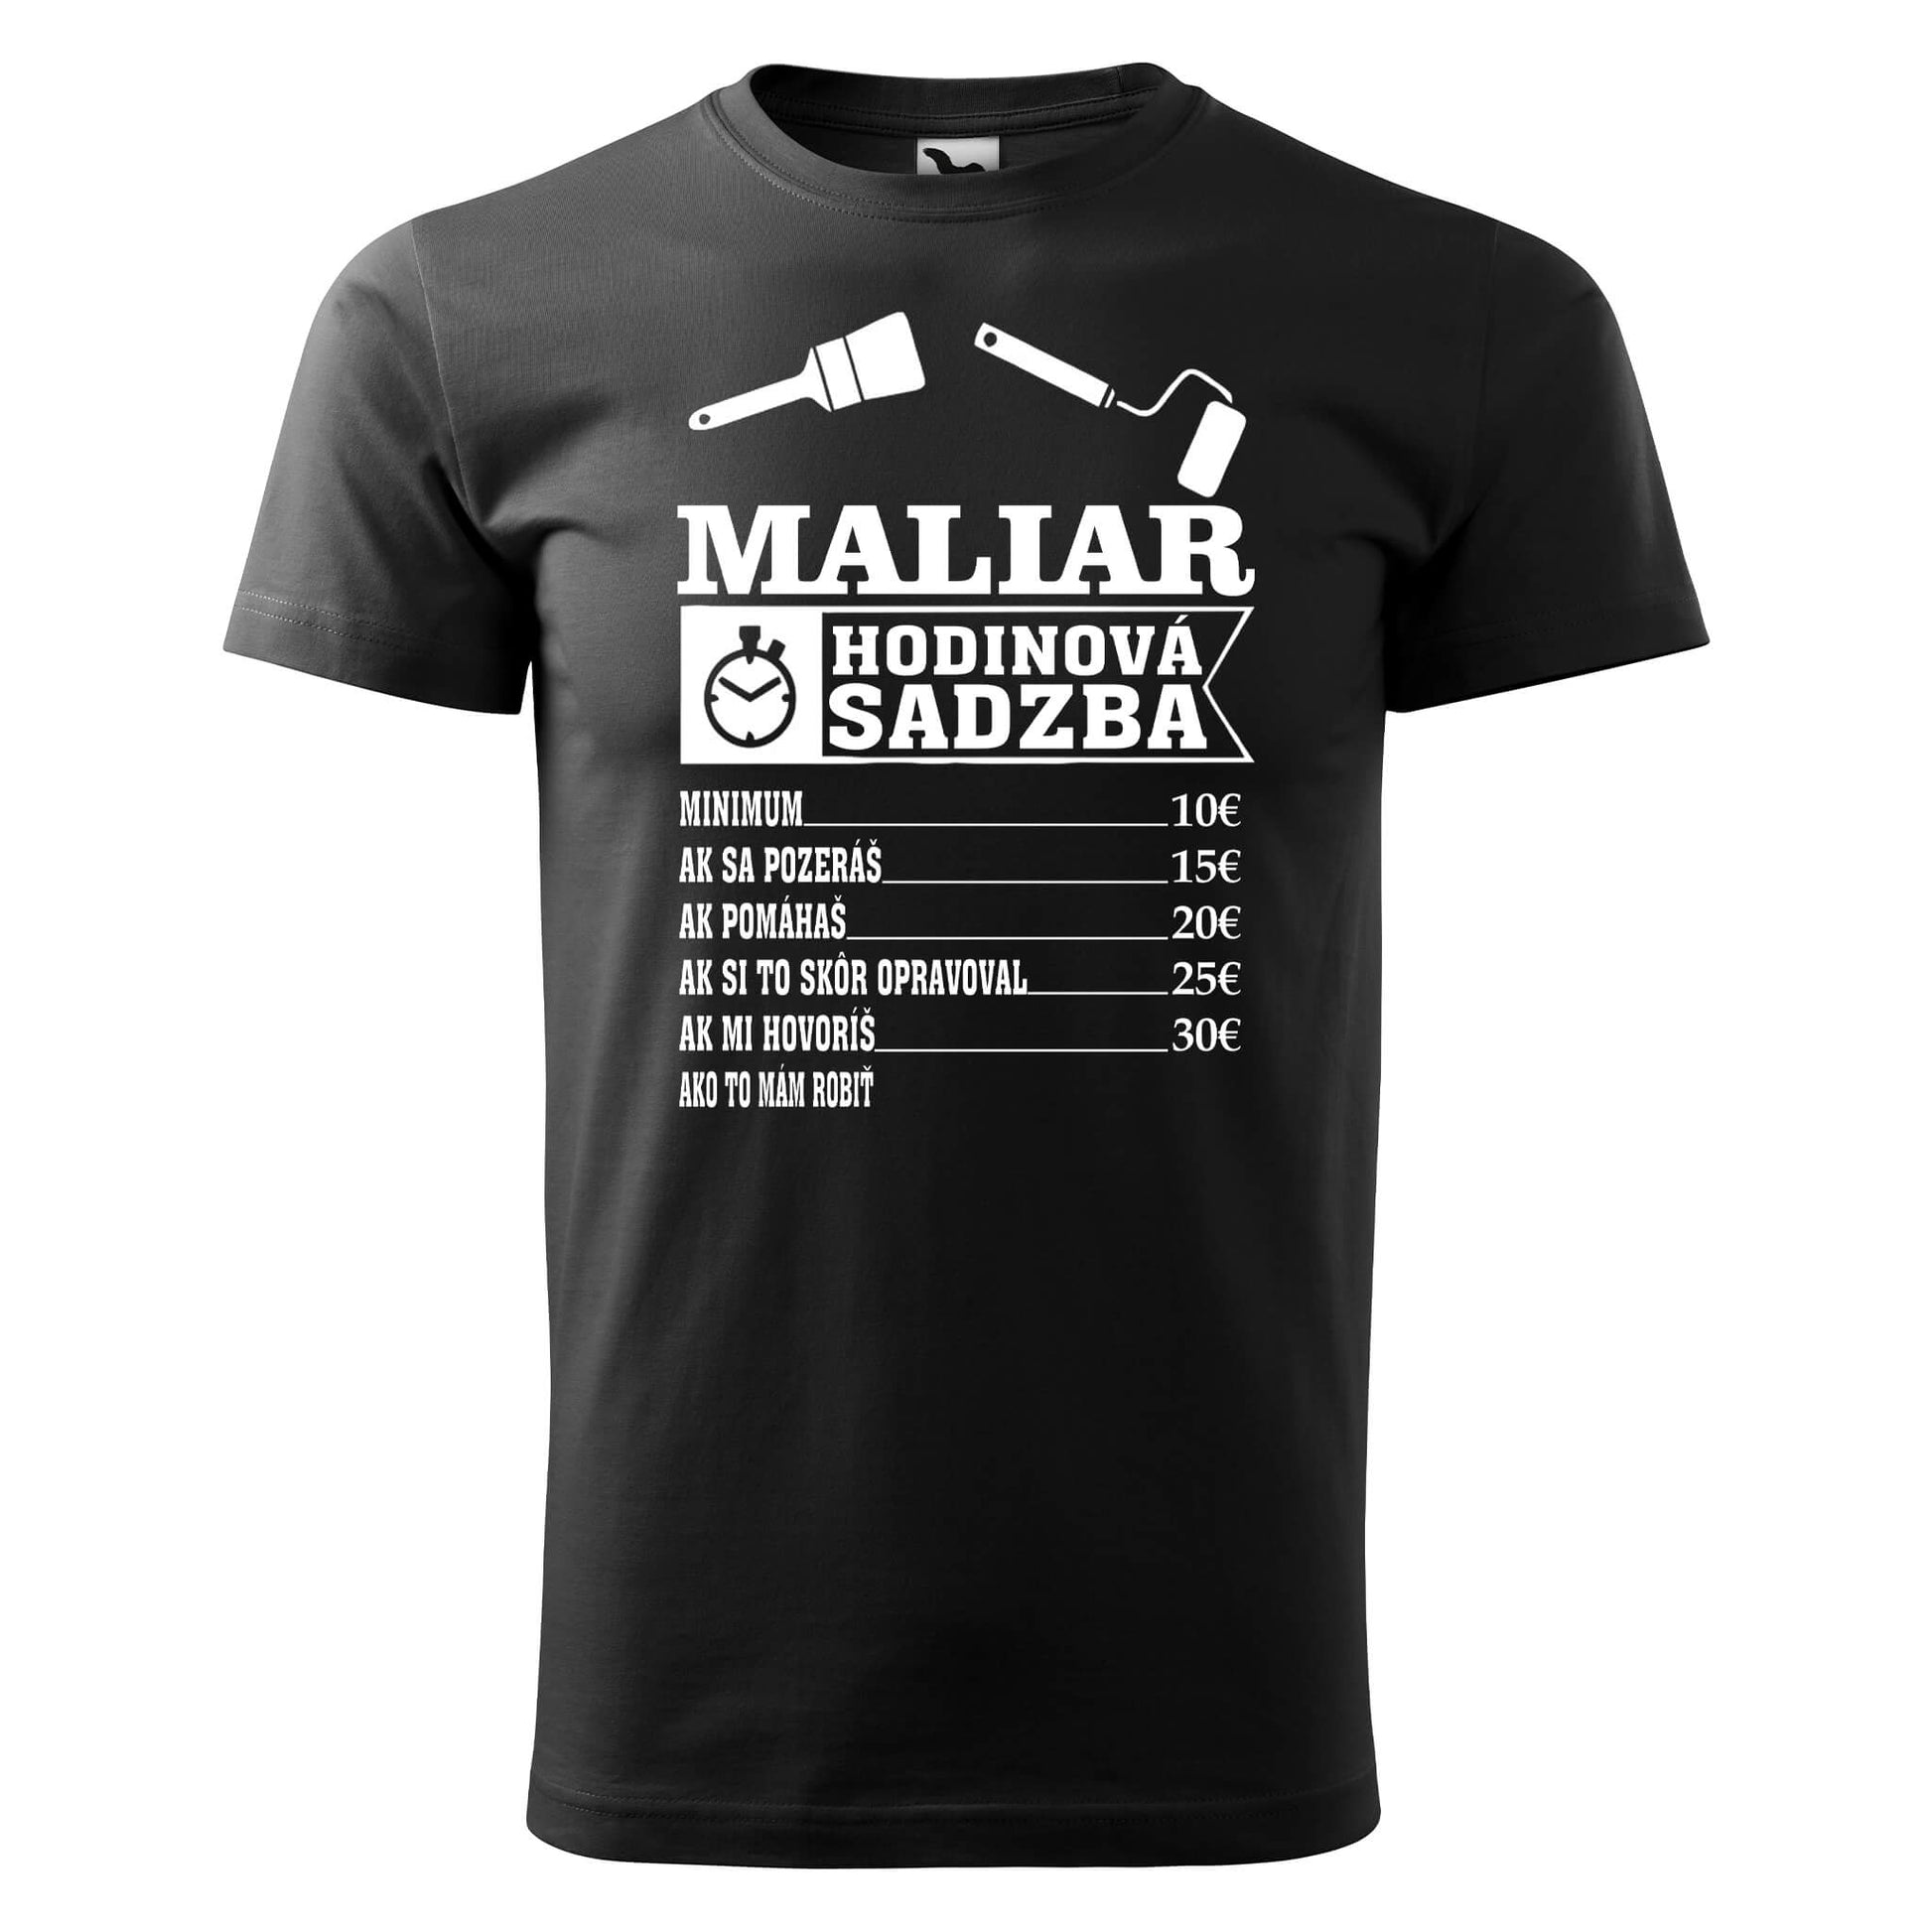 T-shirt - Maliar hodinová sadzba - rvdesignprint